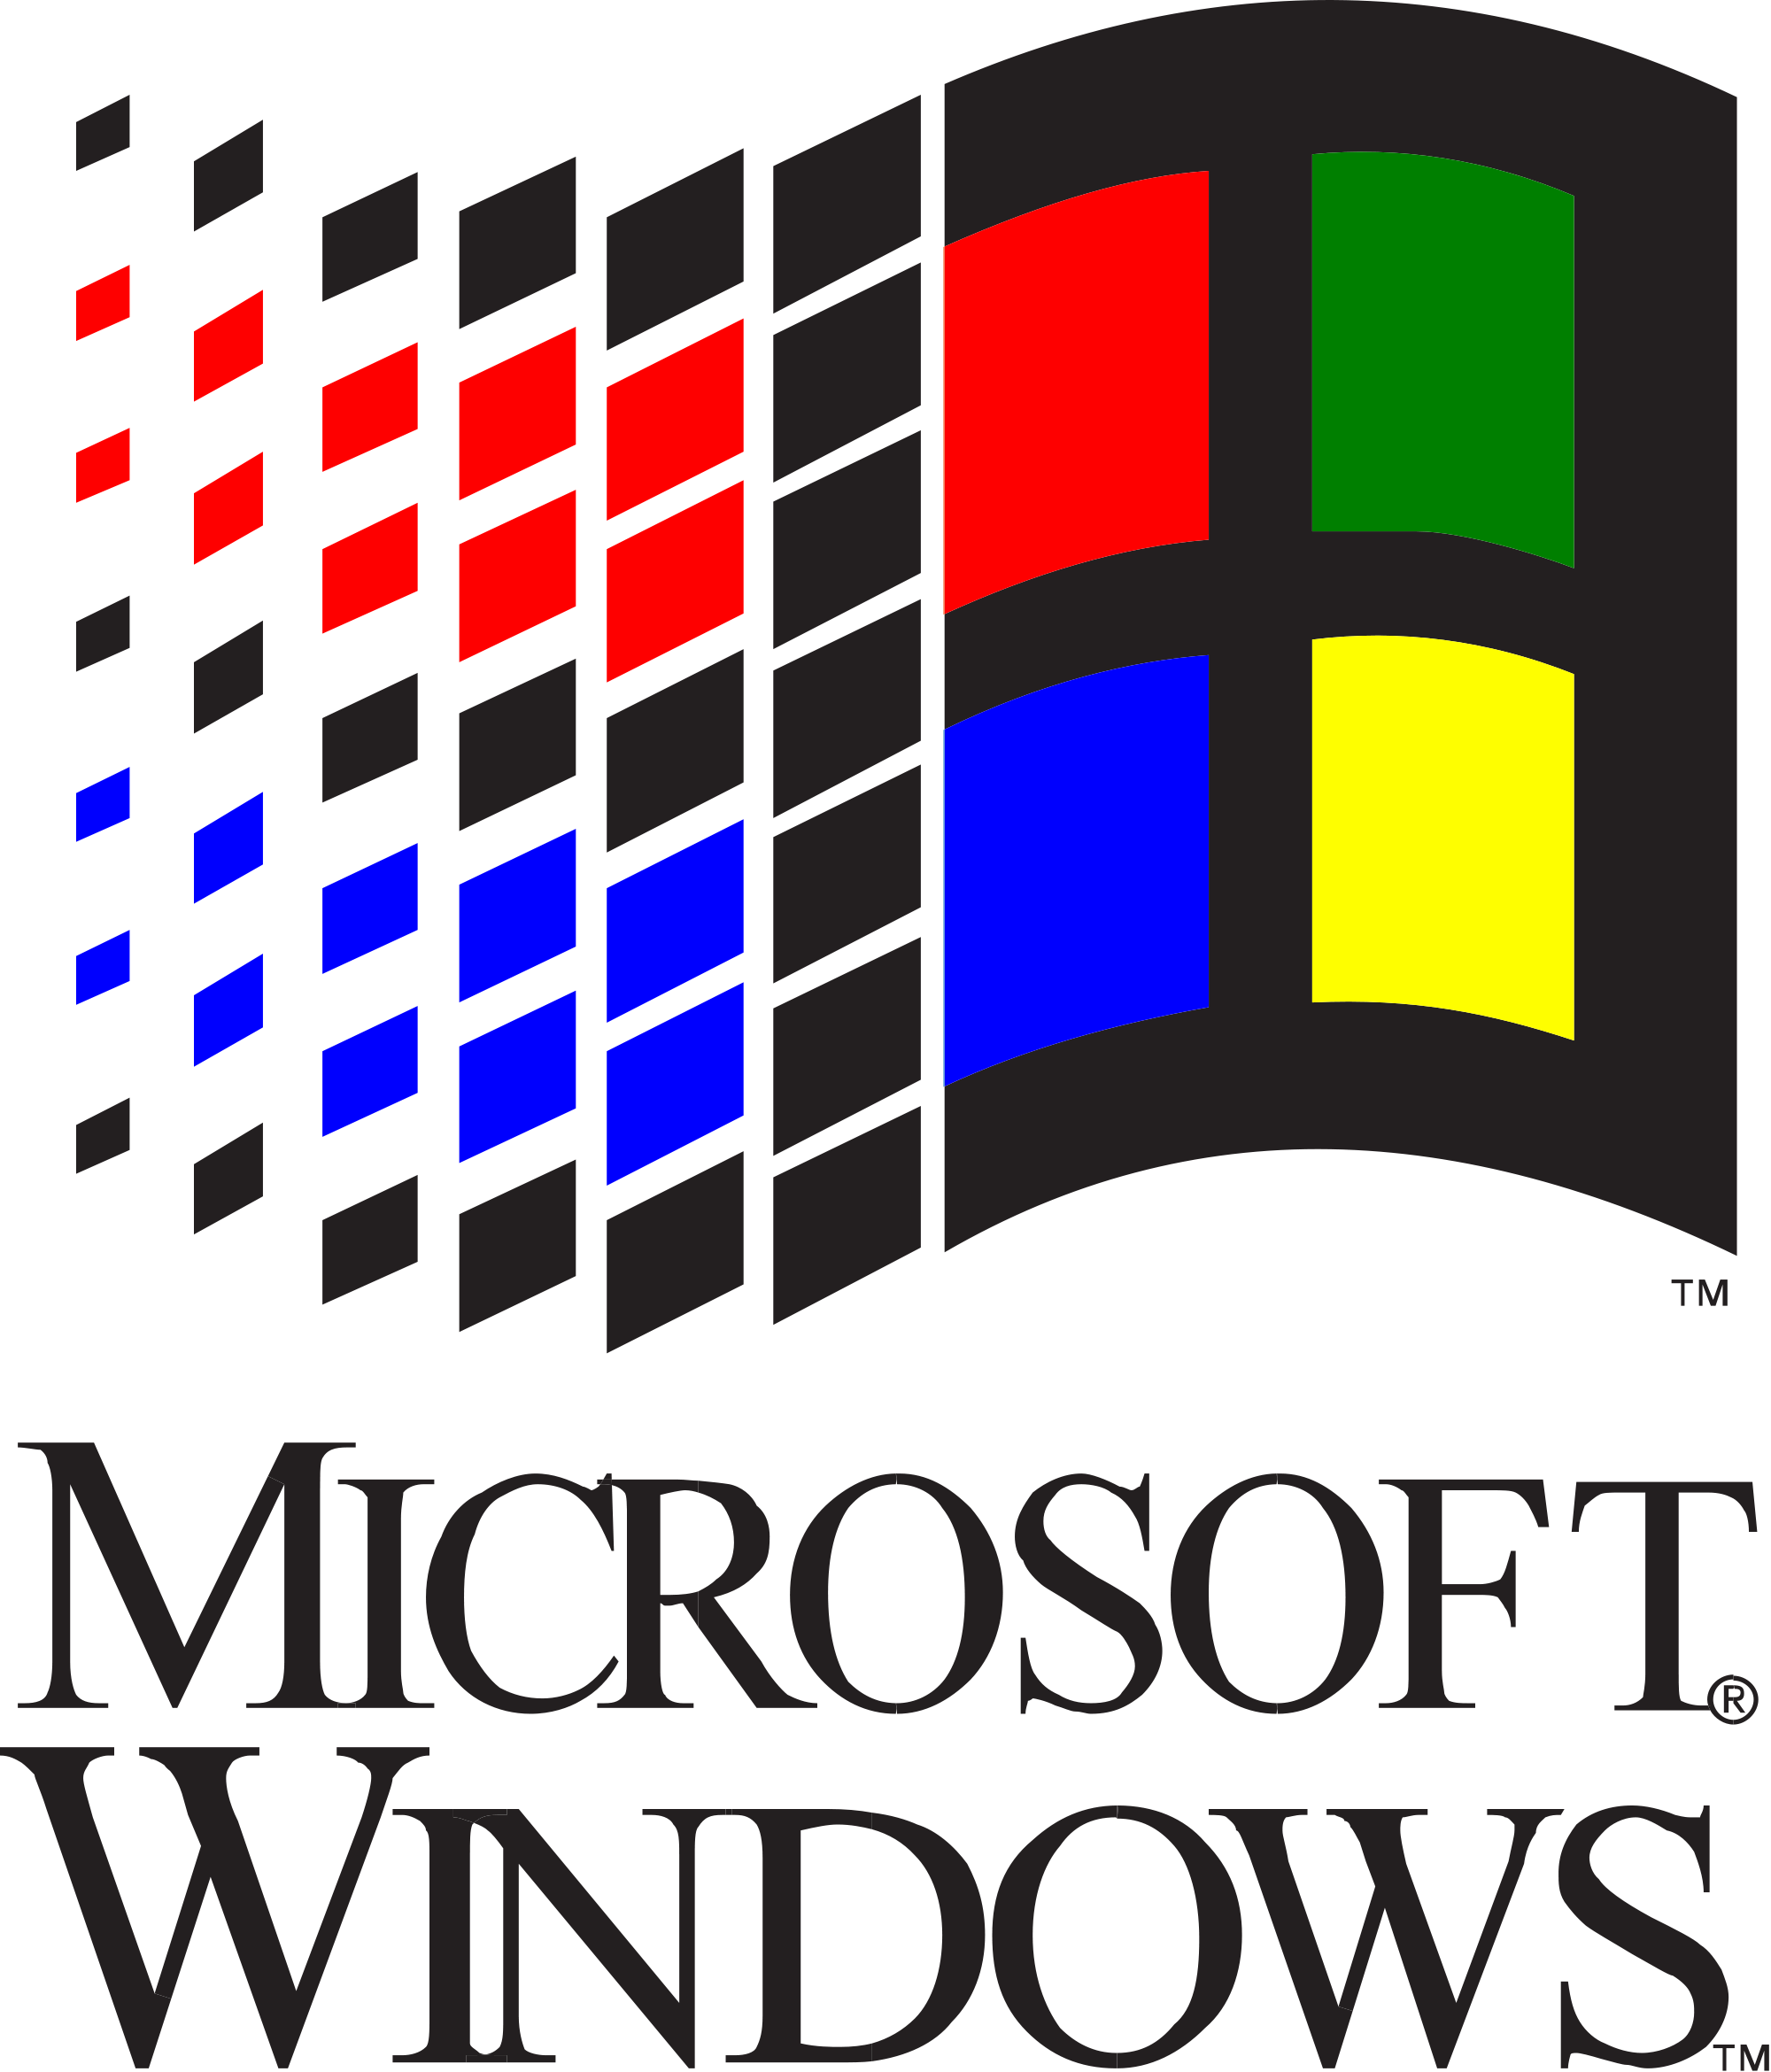 Win clipart living room window. Windows yormajesty s network